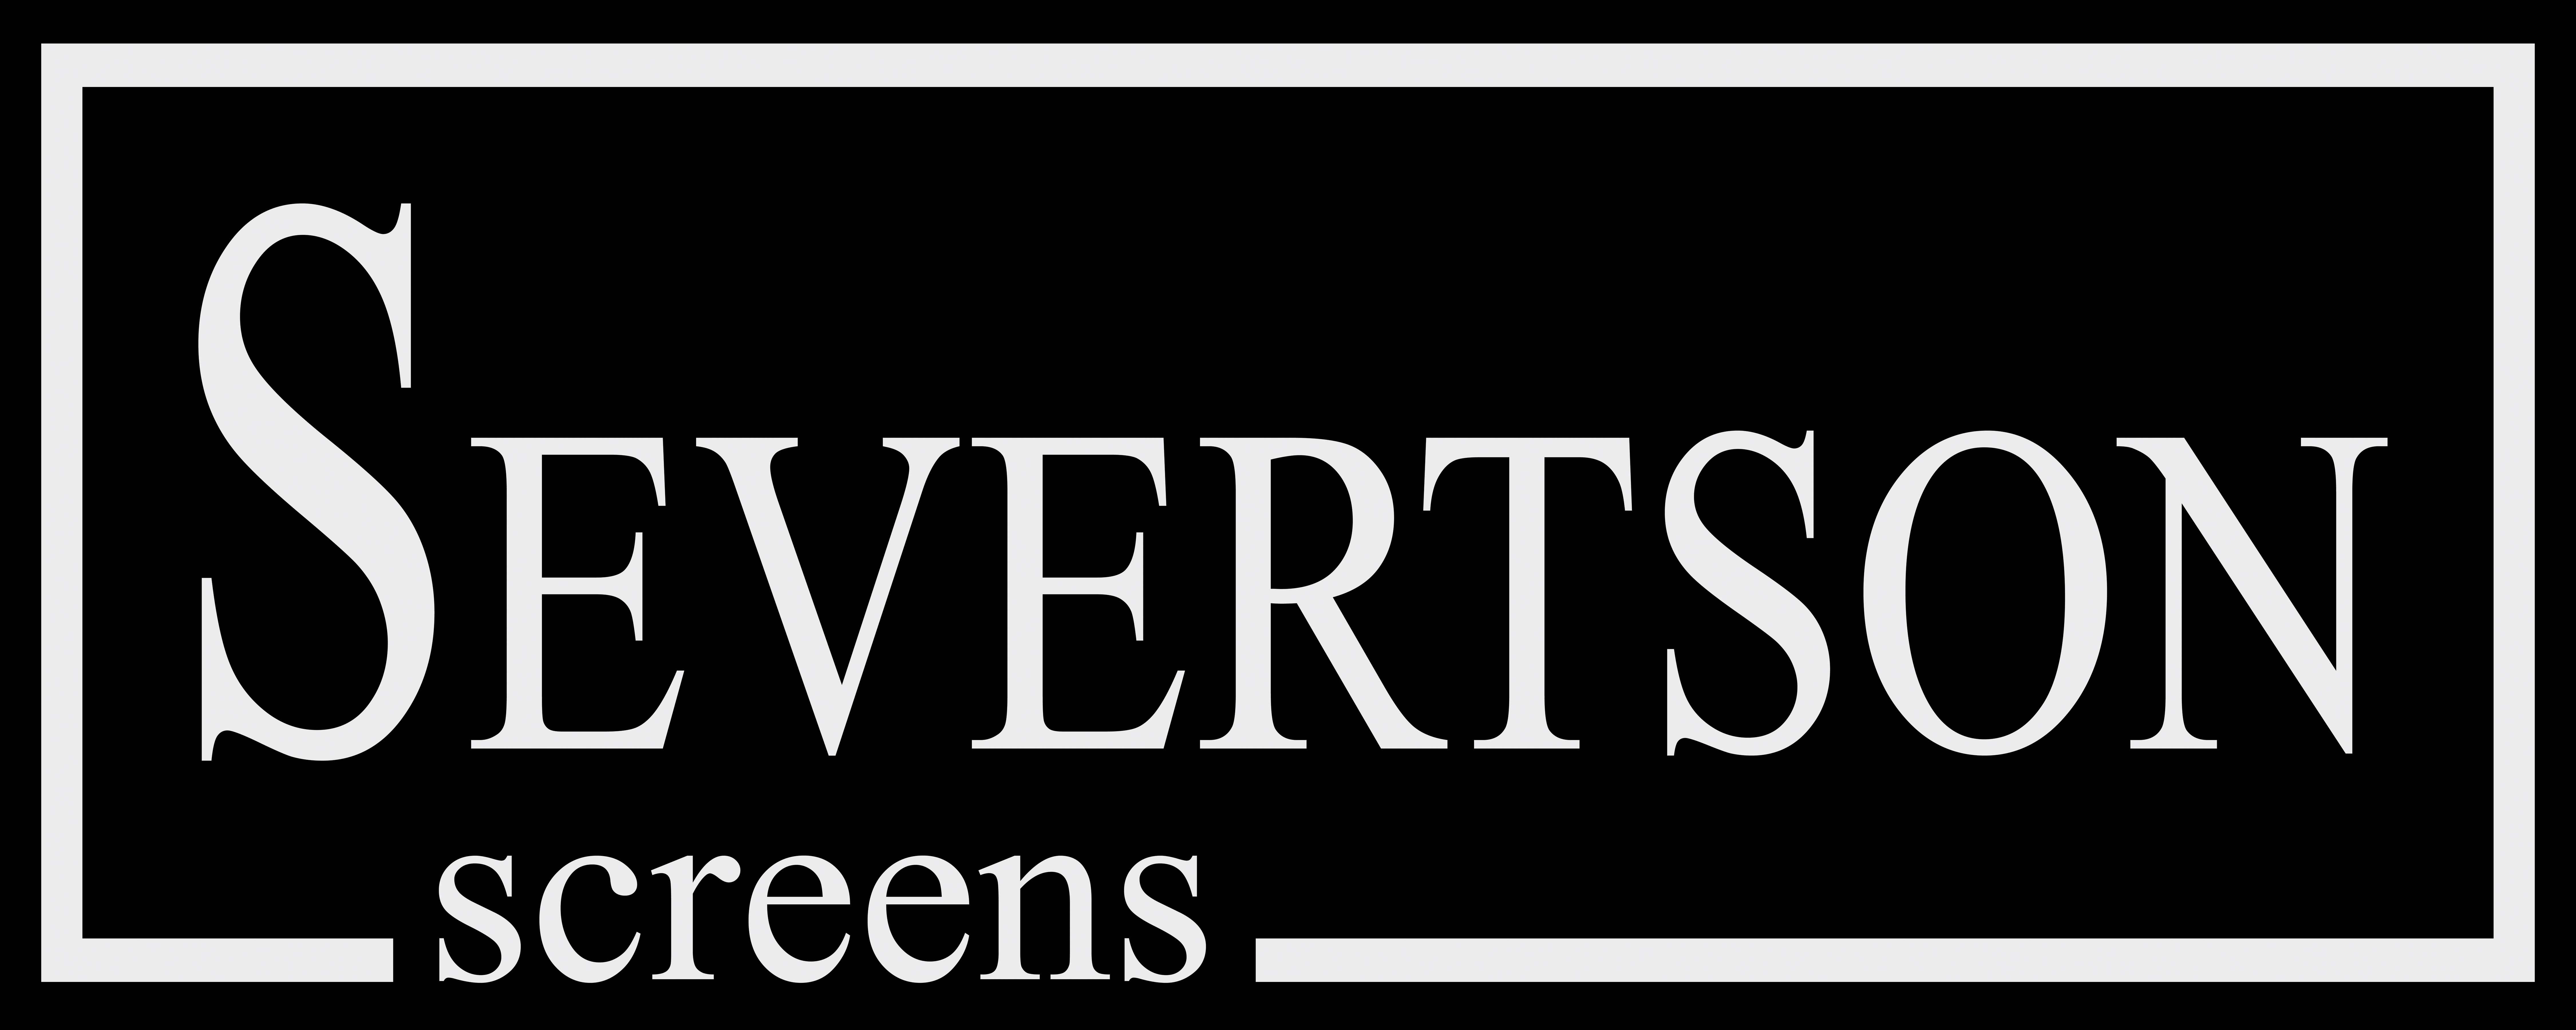 Severtson-Screens-logo-HR-2019